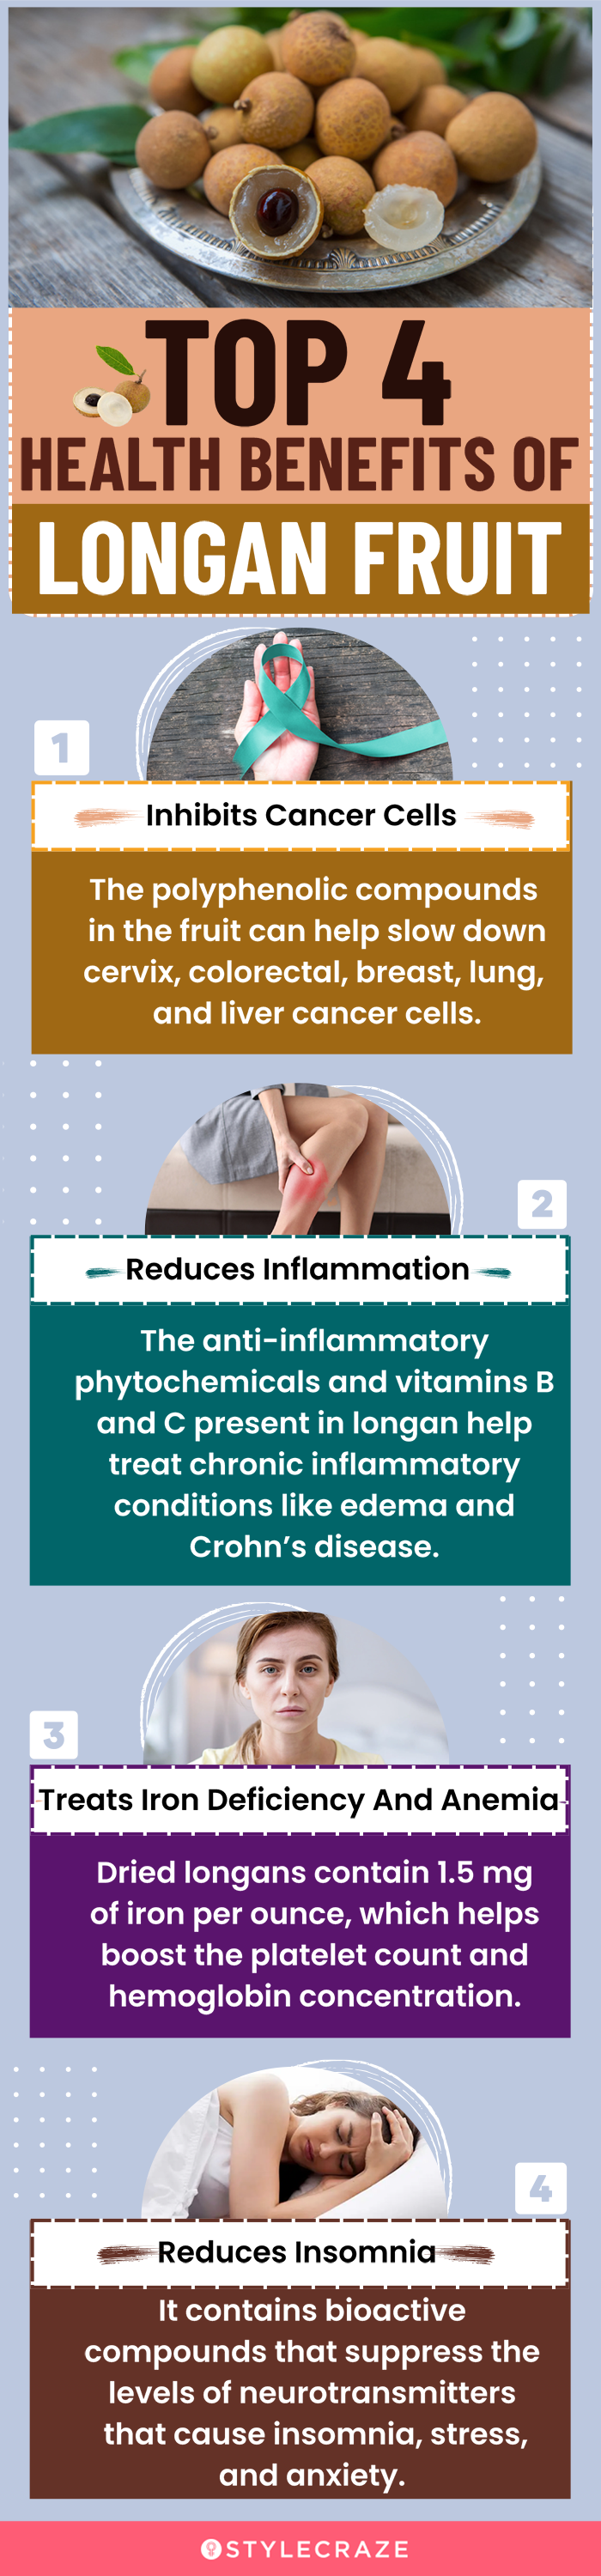 top 4 health benefits of longan fruit (infographic)